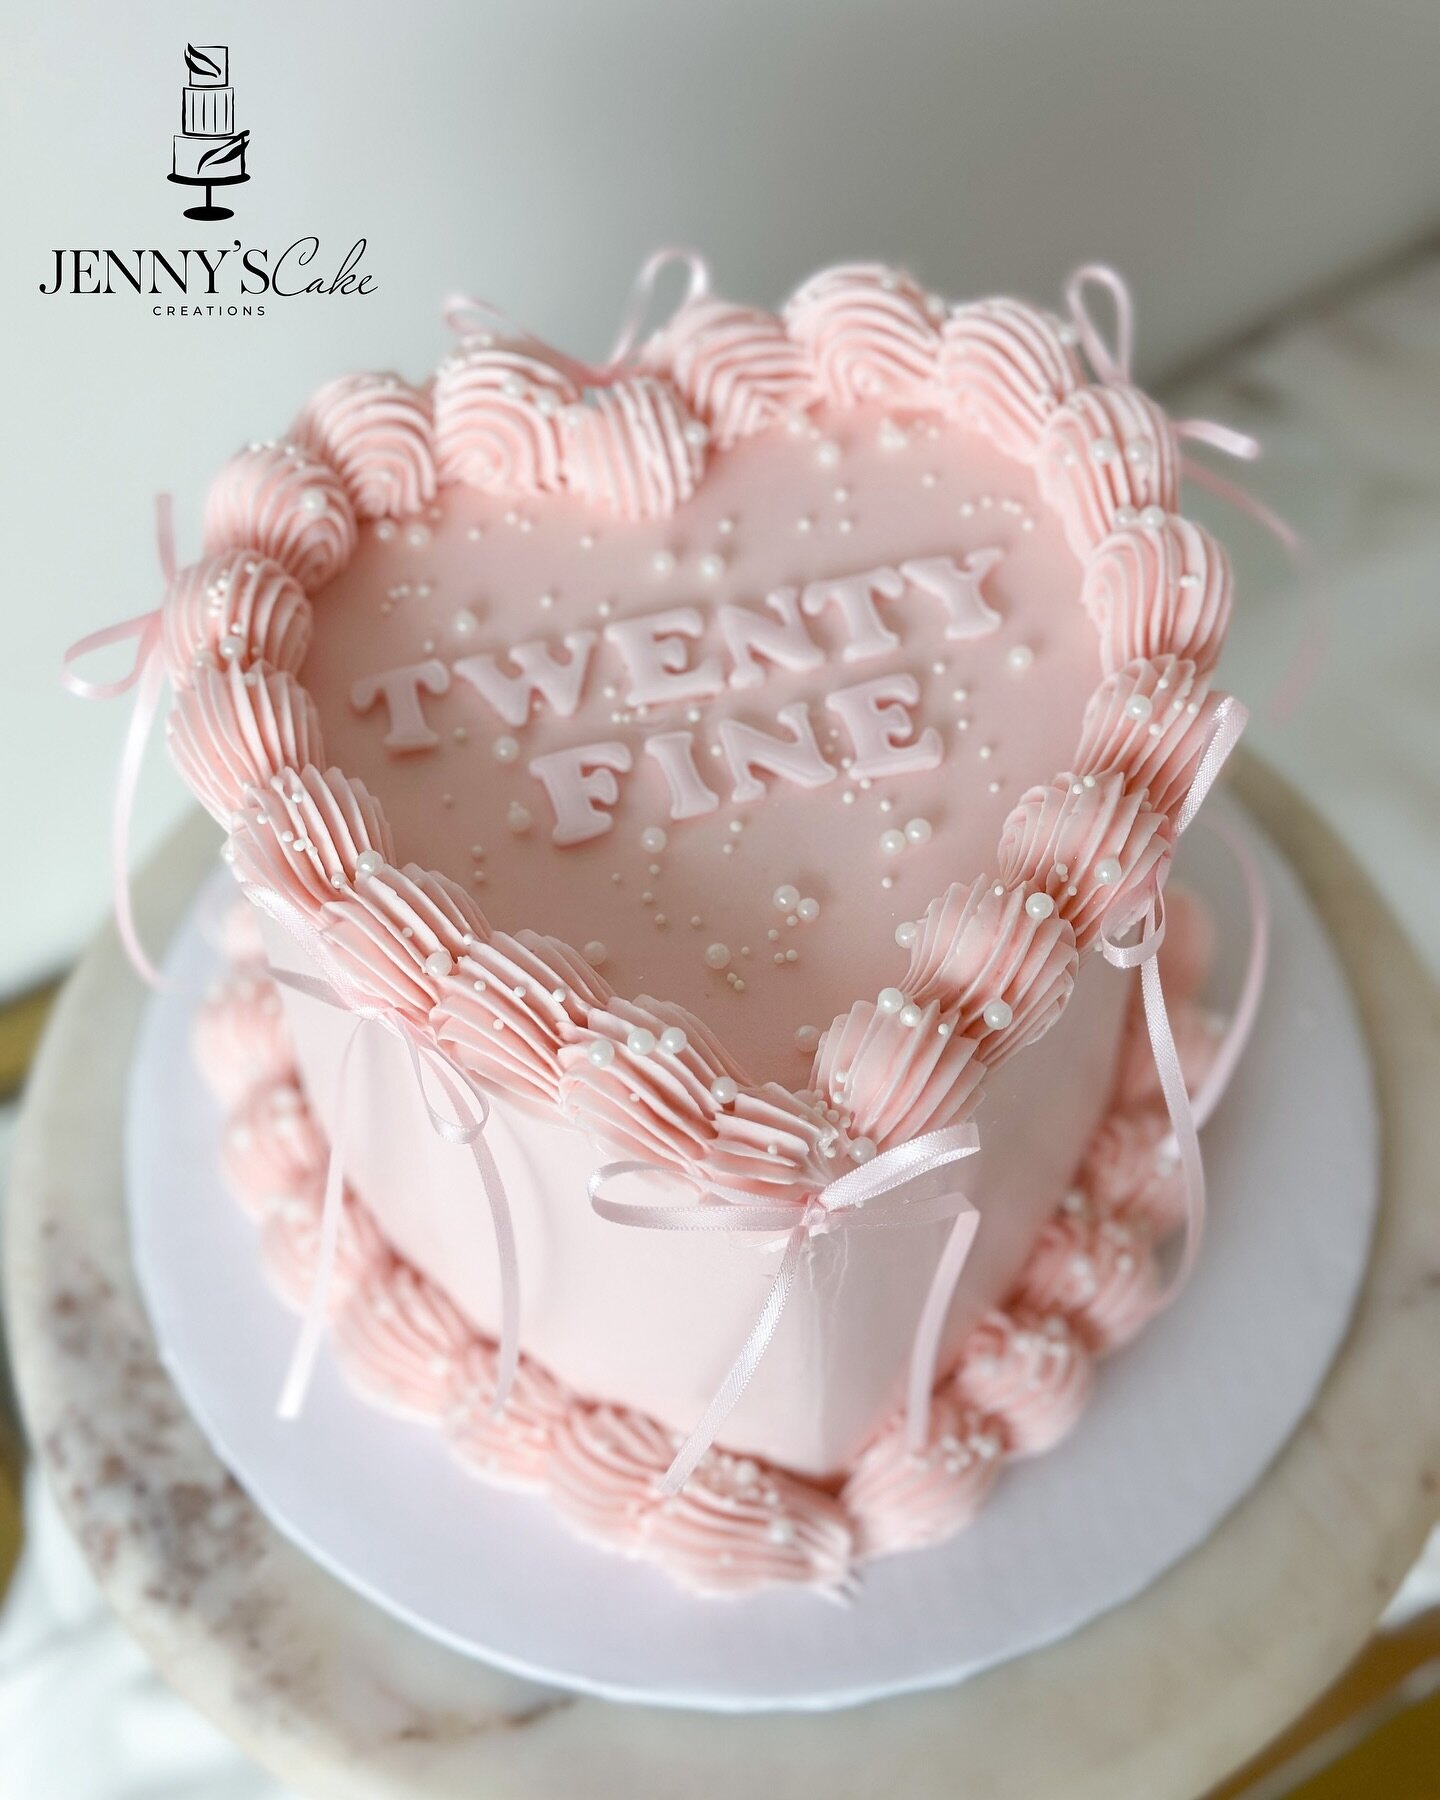 Twenty Fine and Feeling Divine 💕 #BirthdayCelebration #PinkPerfection